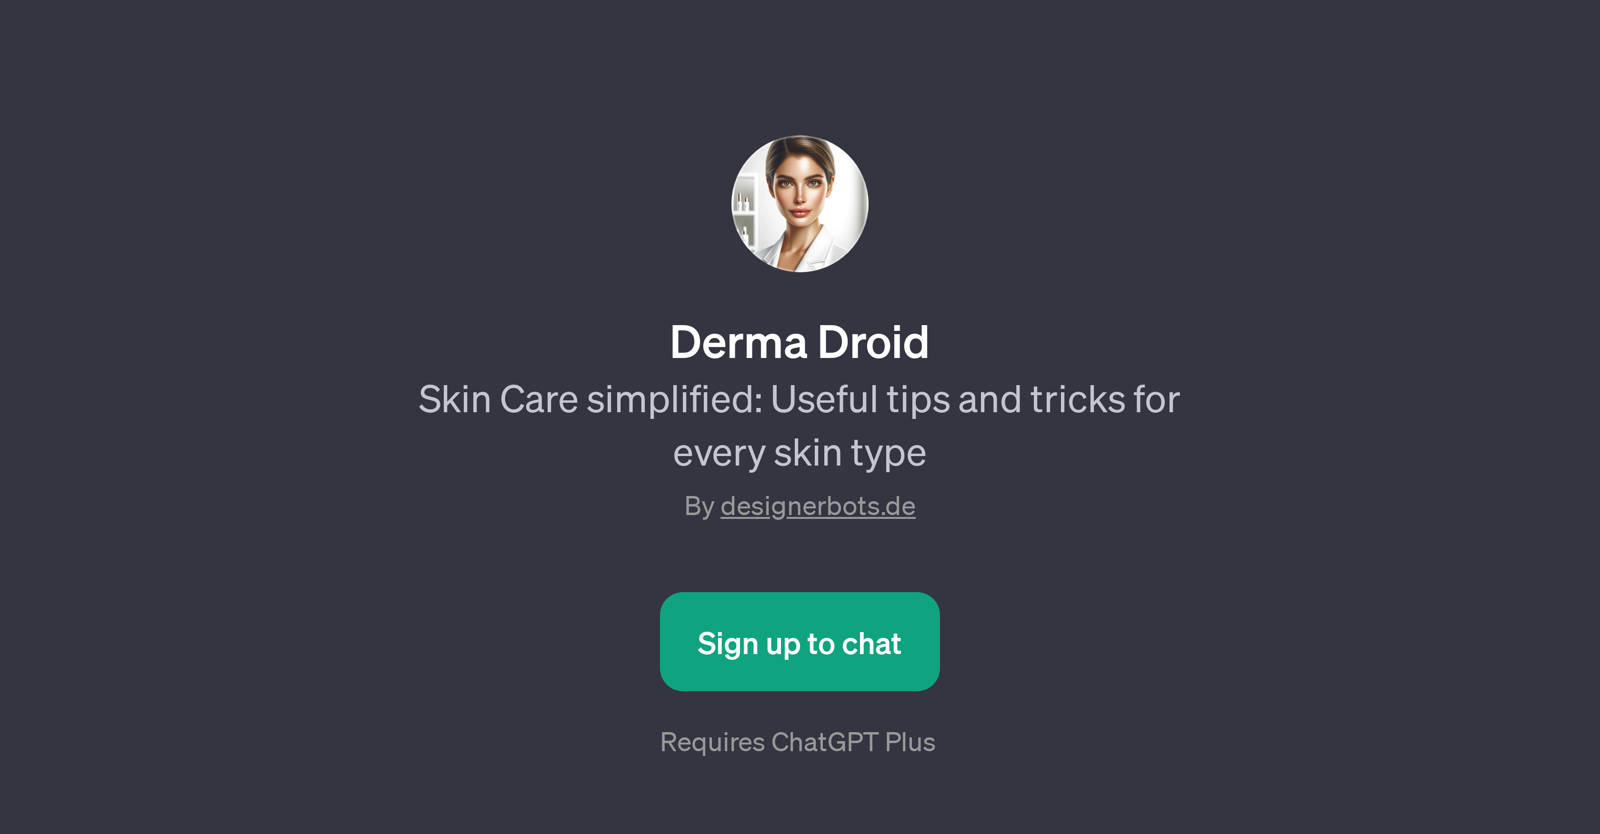 Derma Droid website